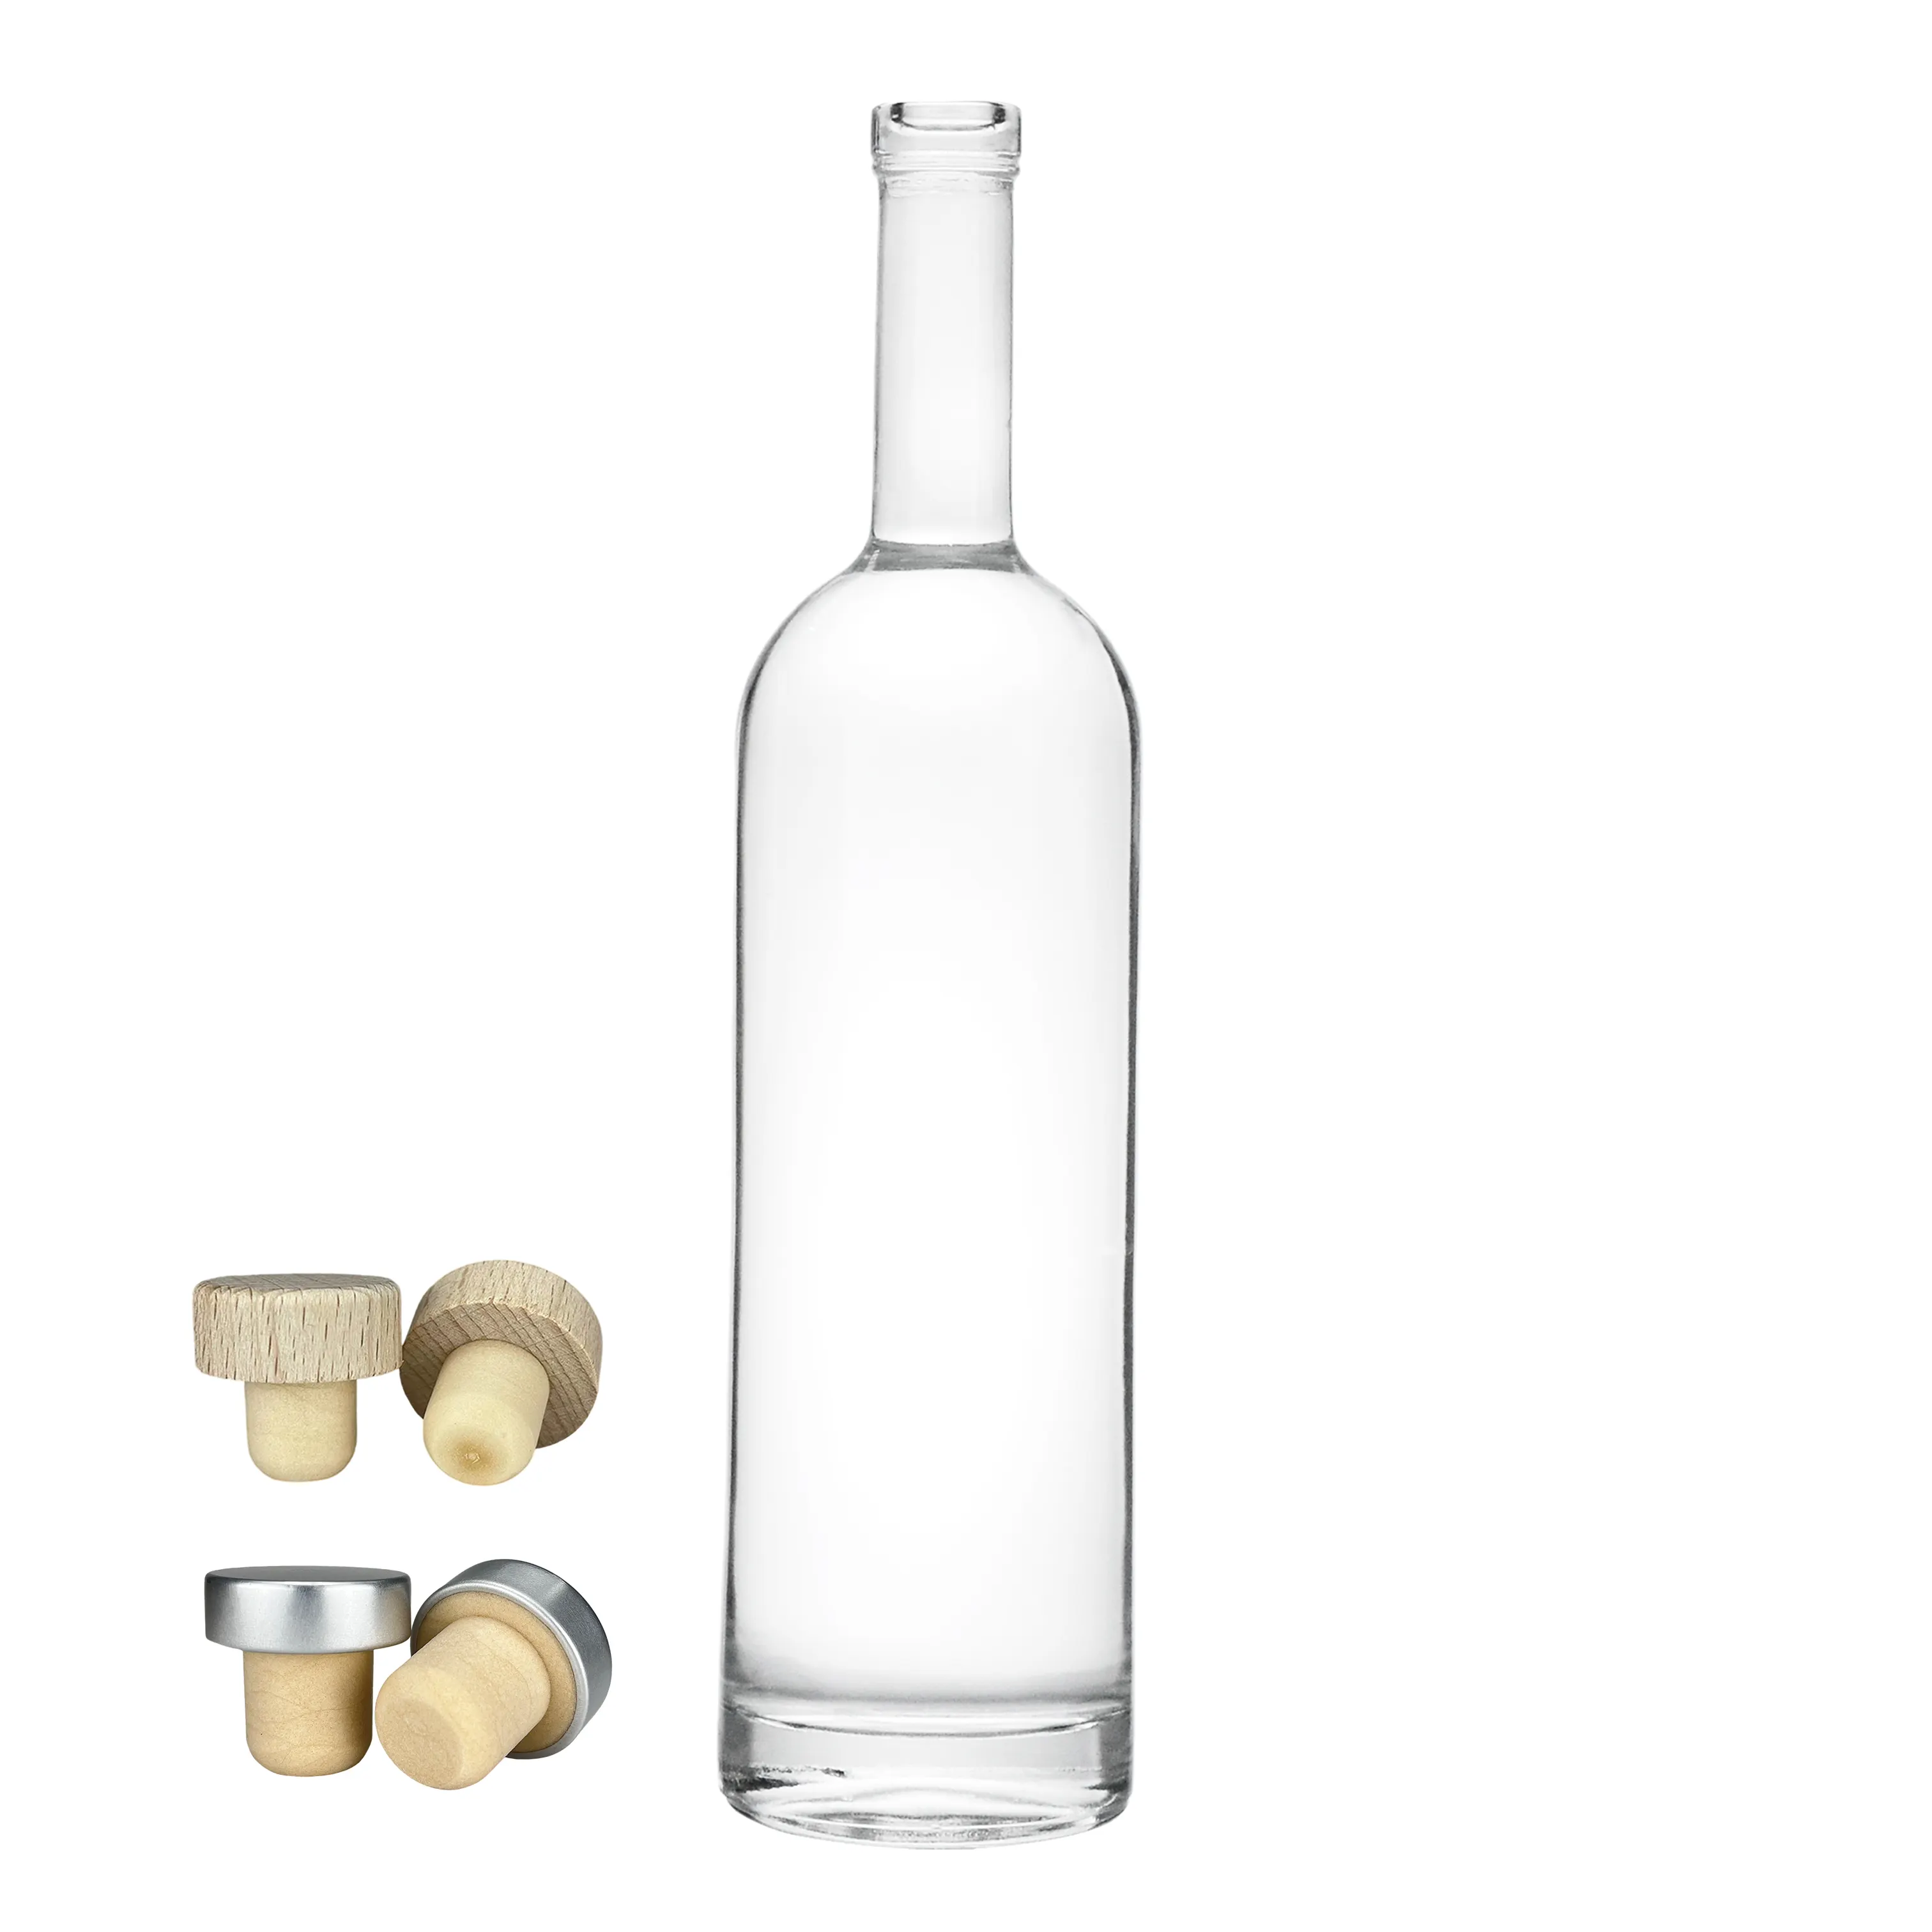 500ml 700ml 750ml Glasflaschen Whisky Bottle Wine Vodka Liquor Bottle Liquor Whisky Glass Bottle Botella De Vidrio For Fill